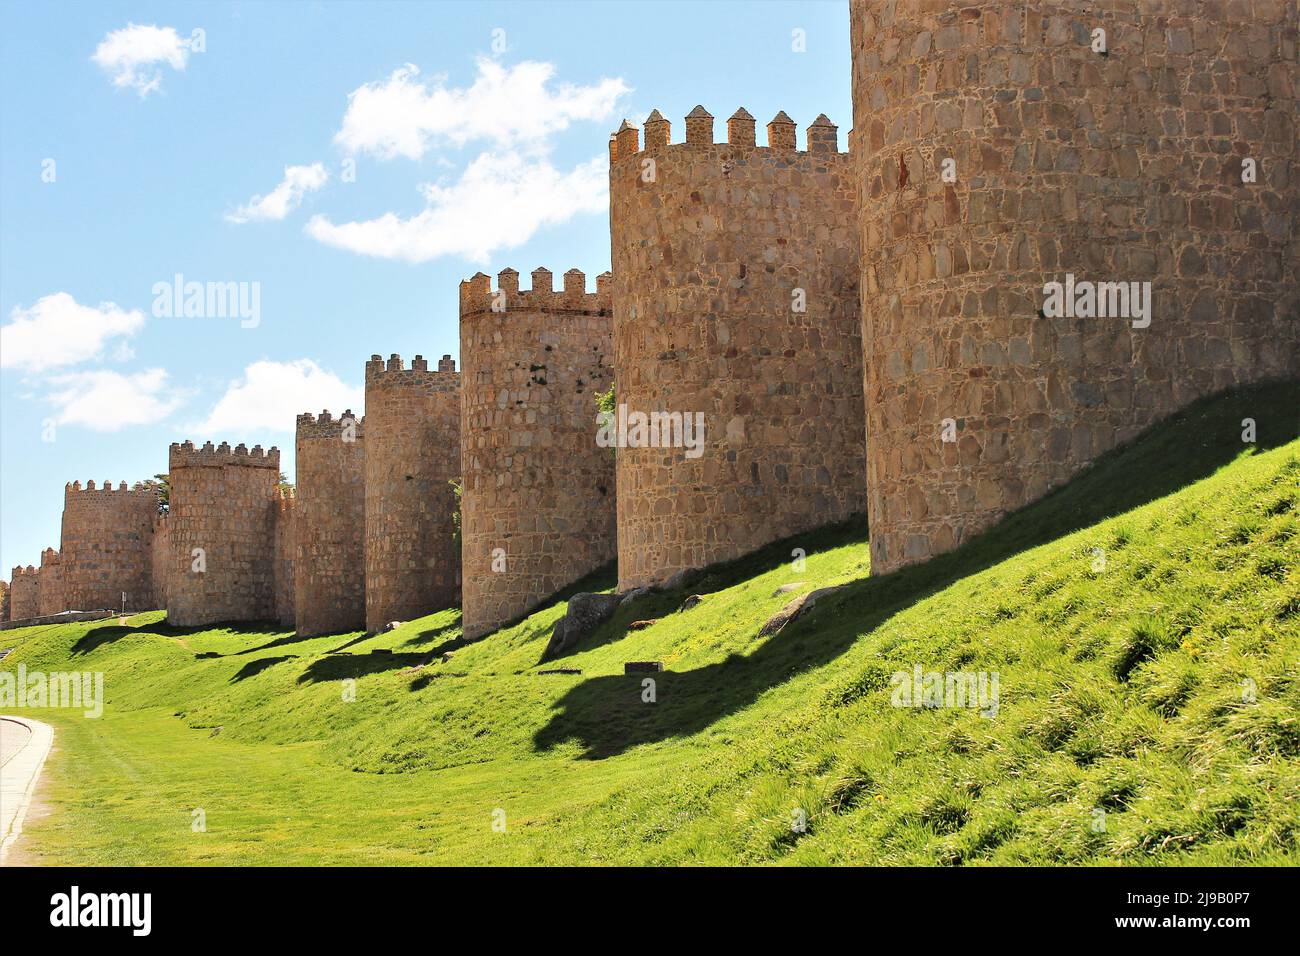 The wall of Avila, Spain in springtime. photo Stock Photo